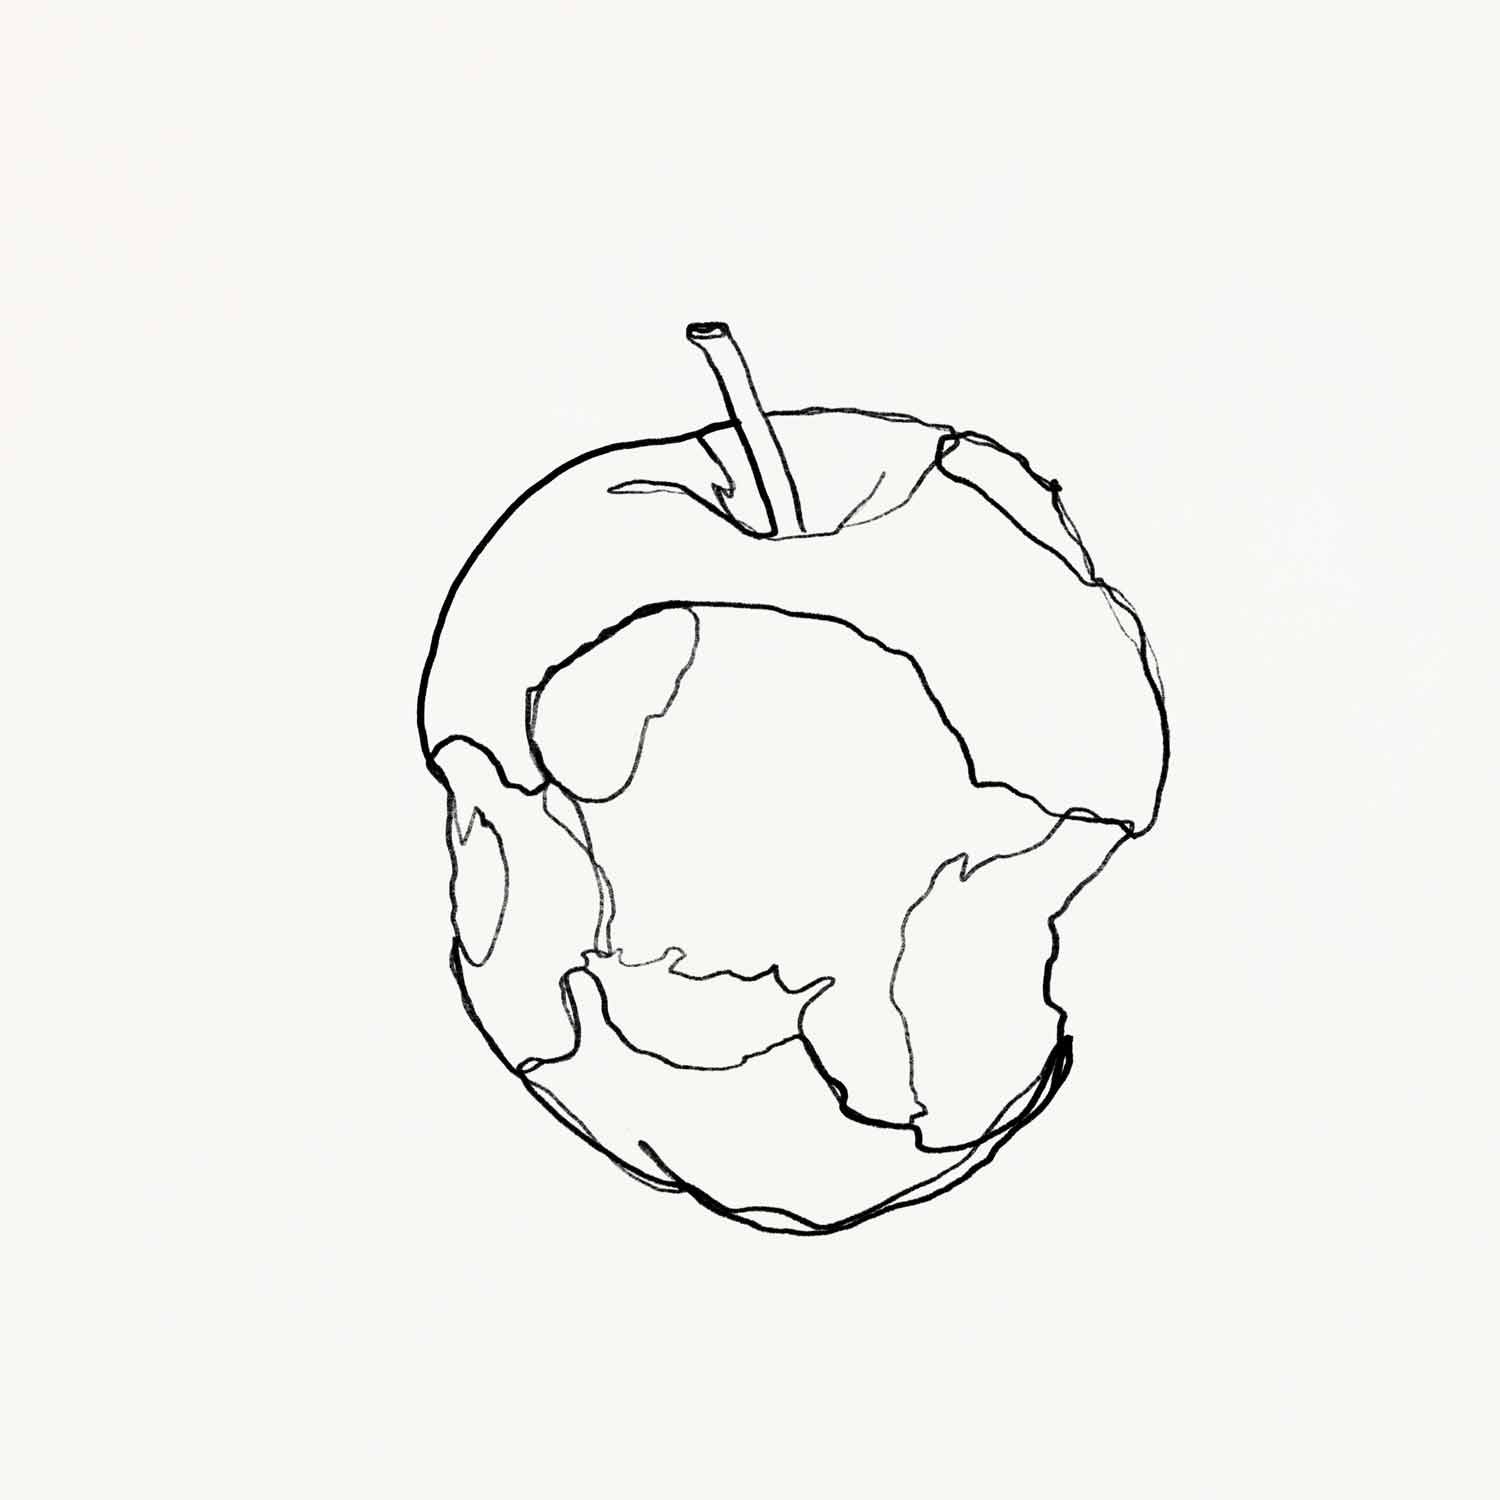 jominca-line-drawing-apple-web.jpg